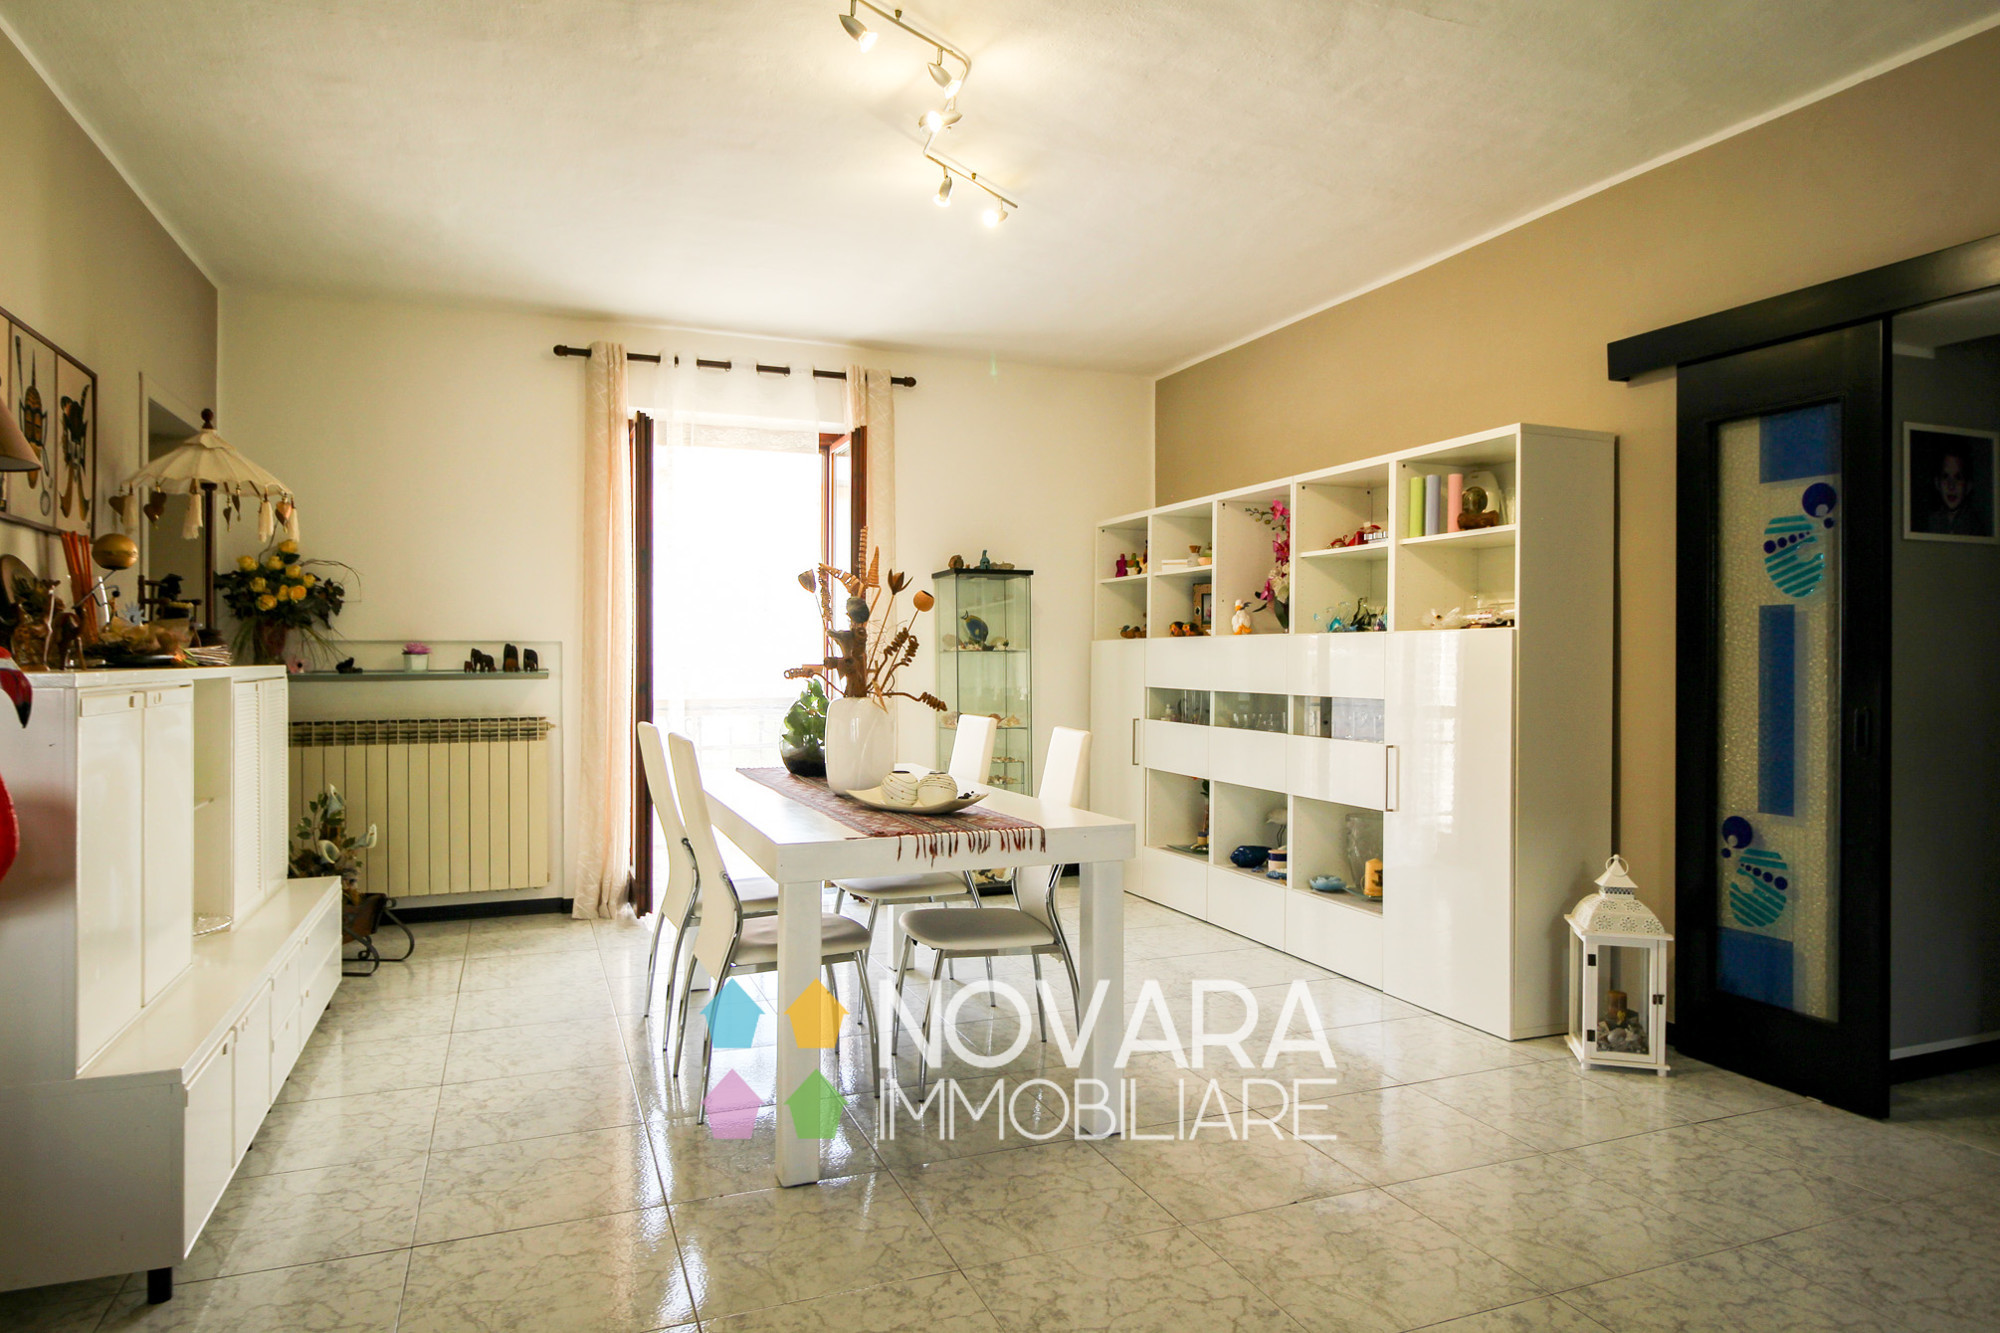 Vendita 5 Locali Appartamento Novara Corso Milano  483962